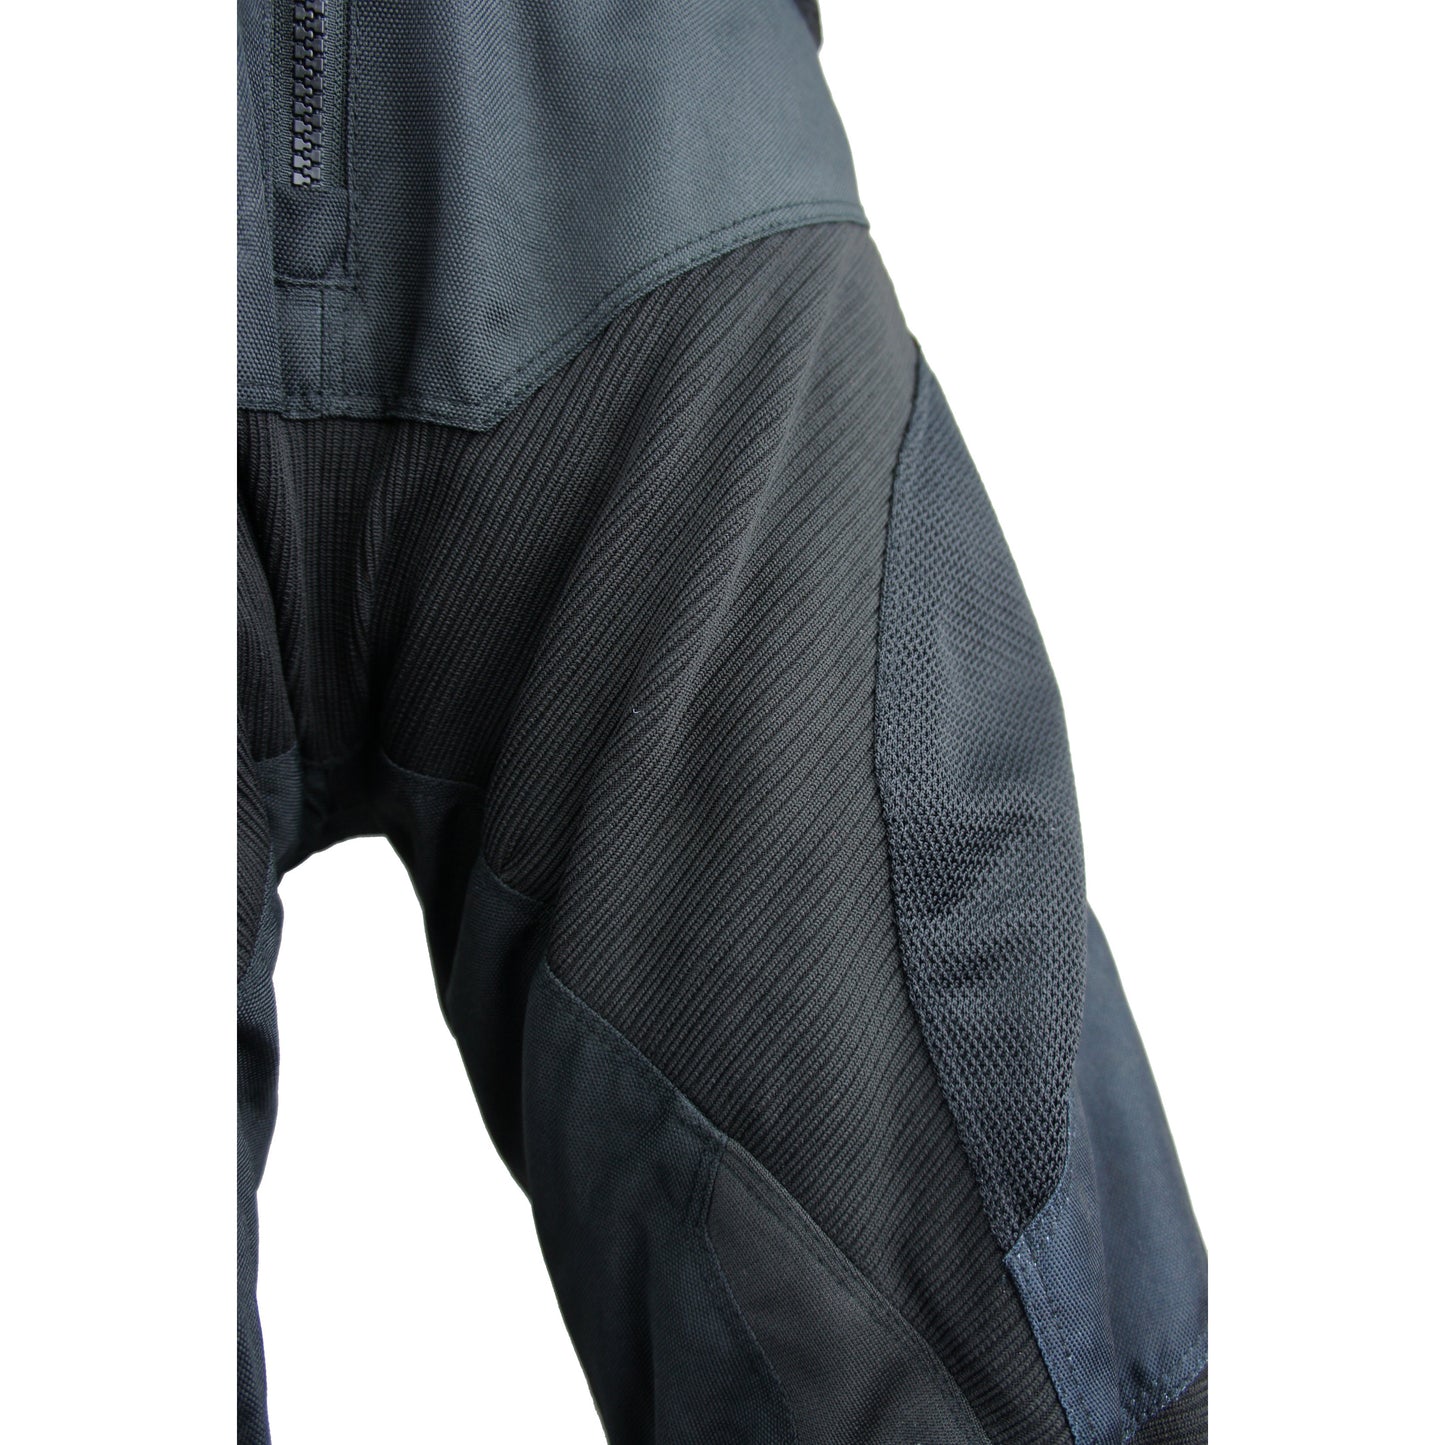 Pre-order sale JP-227308-BK ORANGE BERIK MX pants